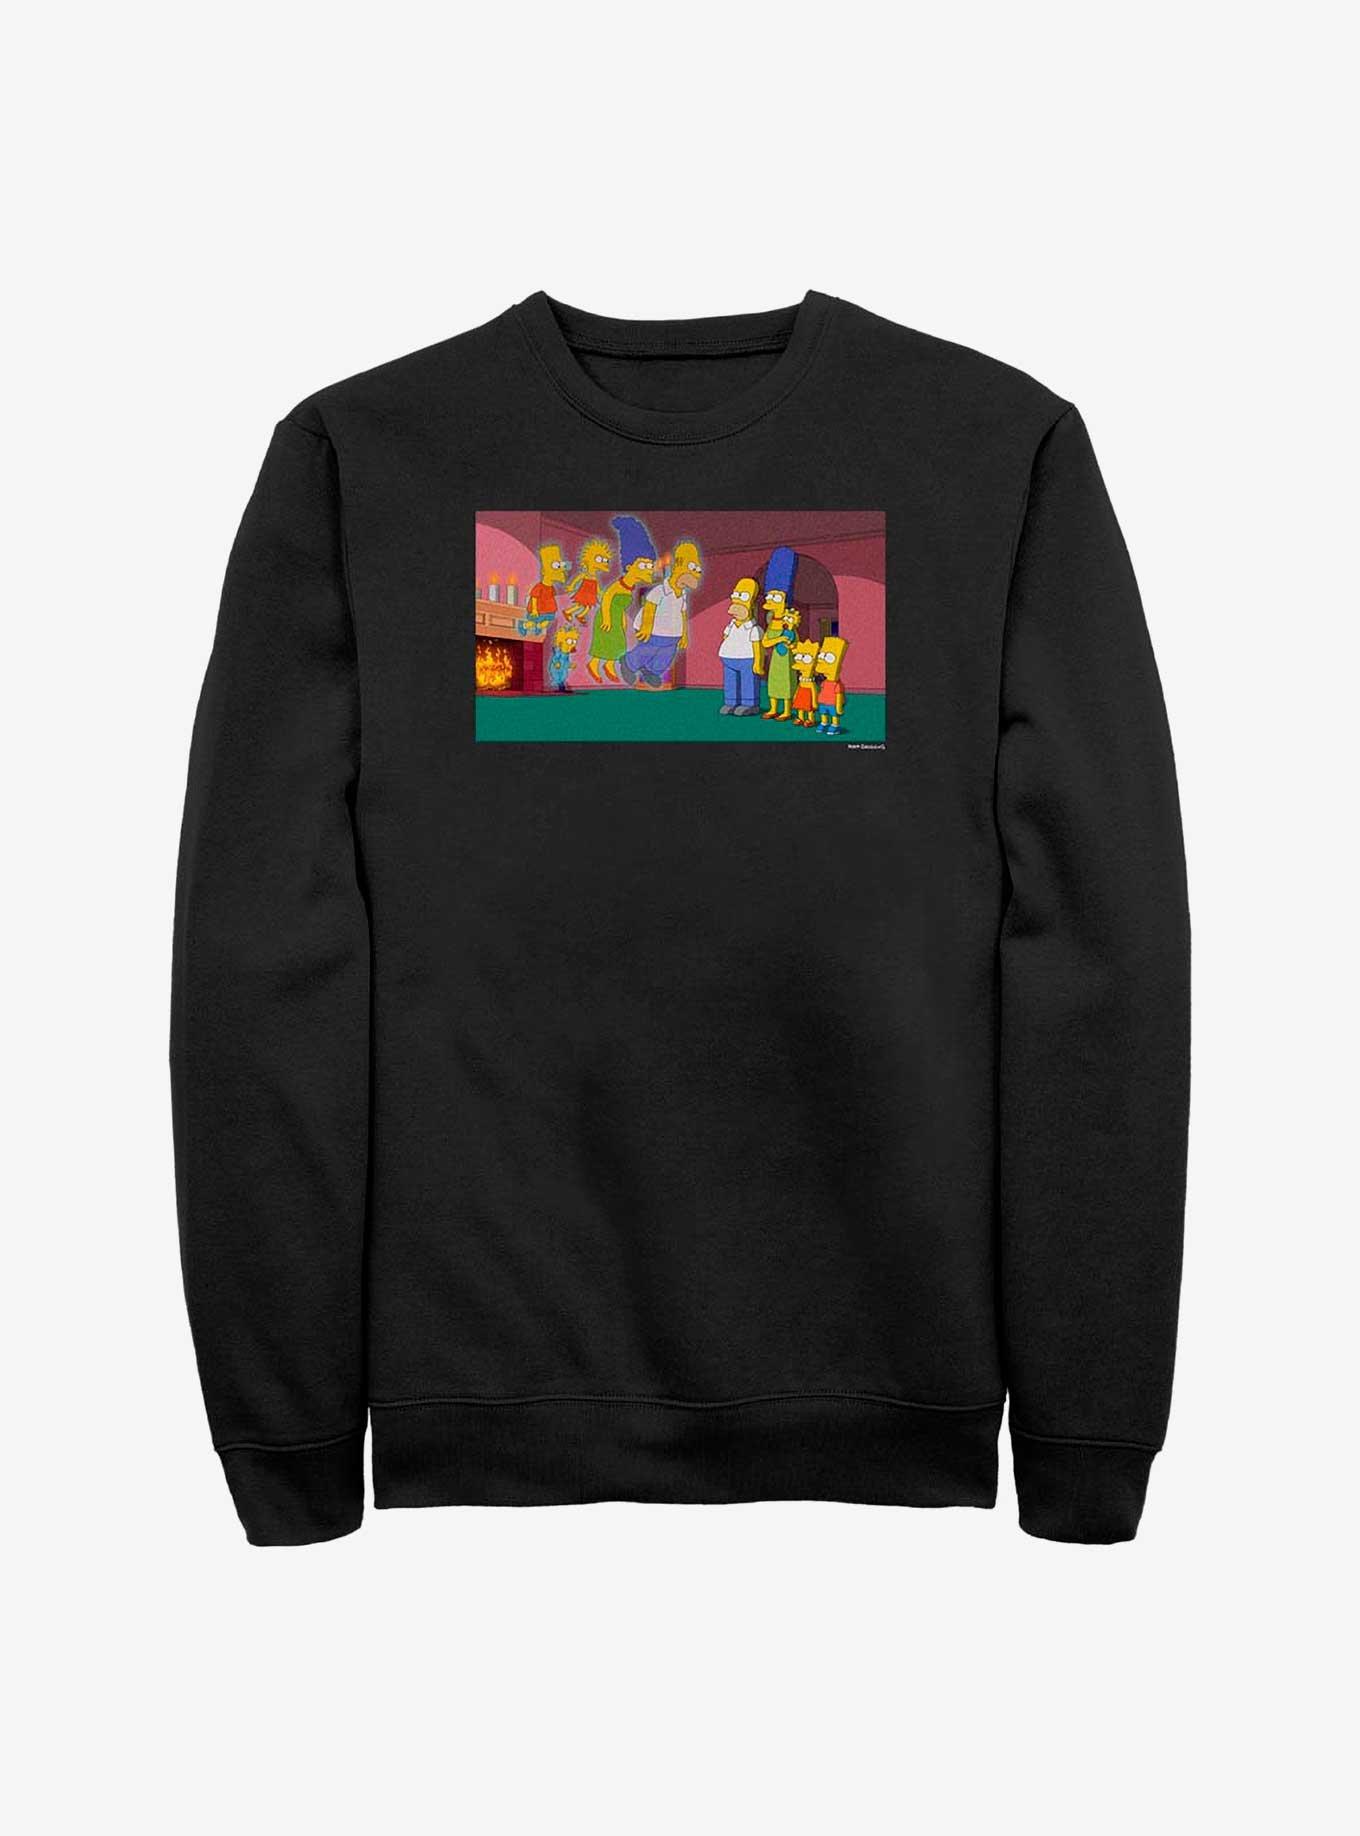 The Simpsons Doppelgangers Crew Sweatshirt